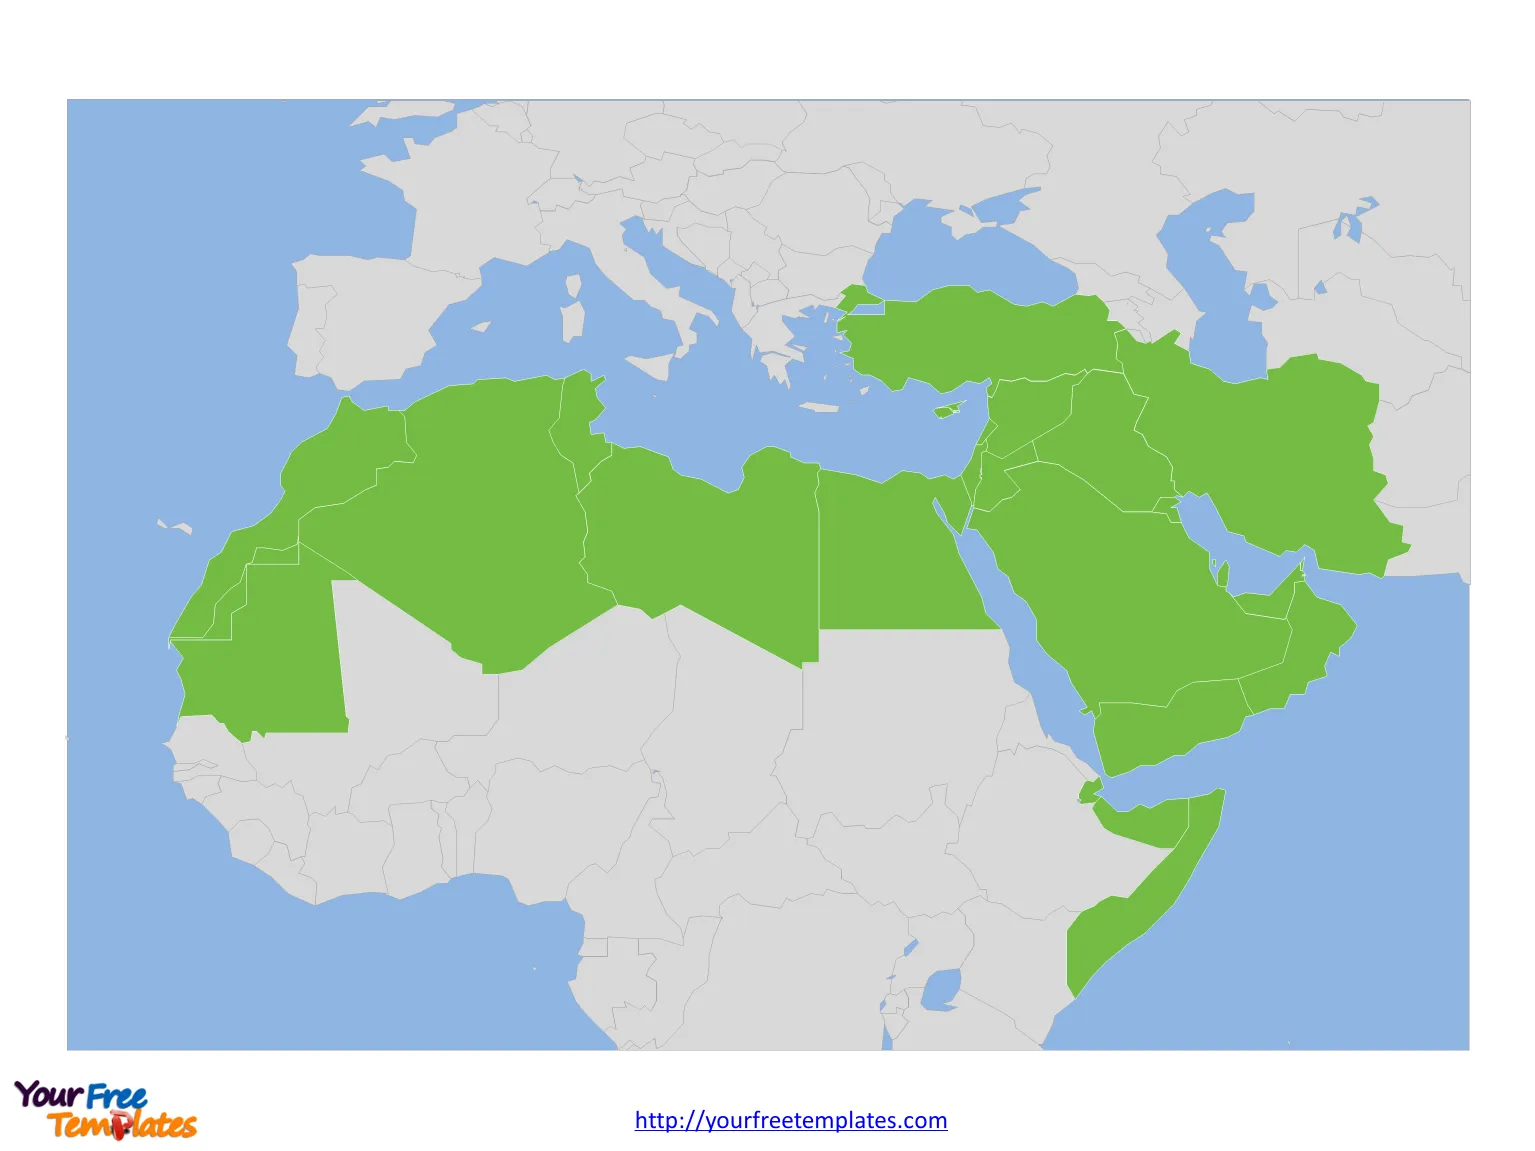 Map of MENA Region in broad definition